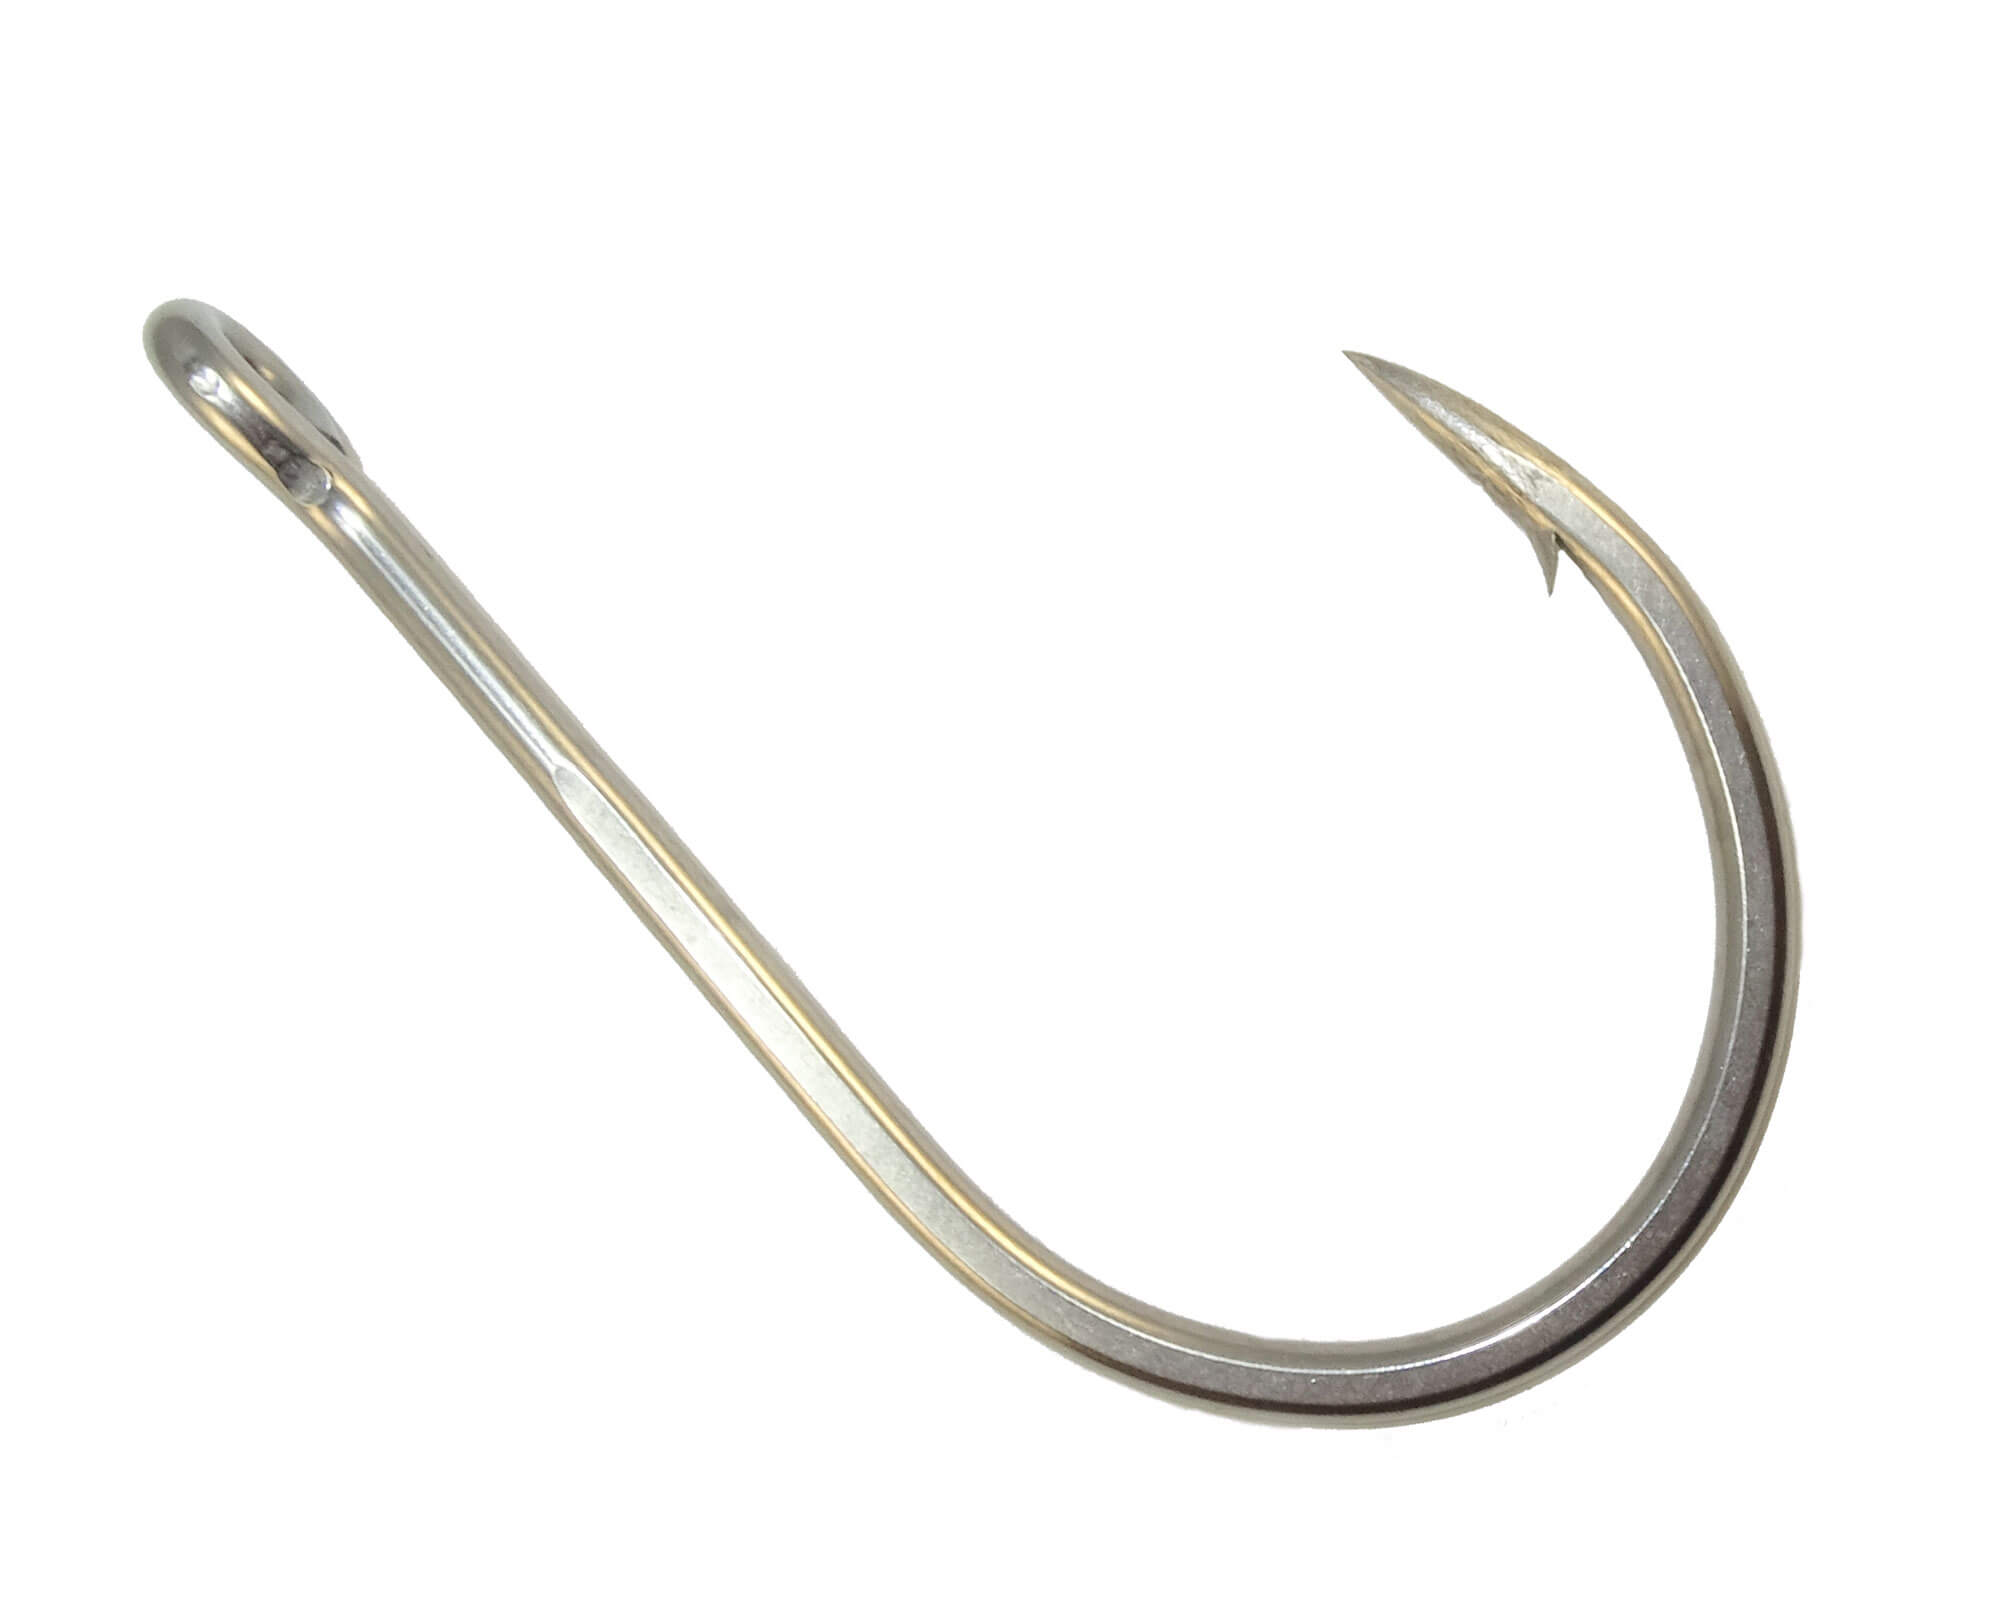 Best hooks for marlin - Hays Hooks - Made in Japan